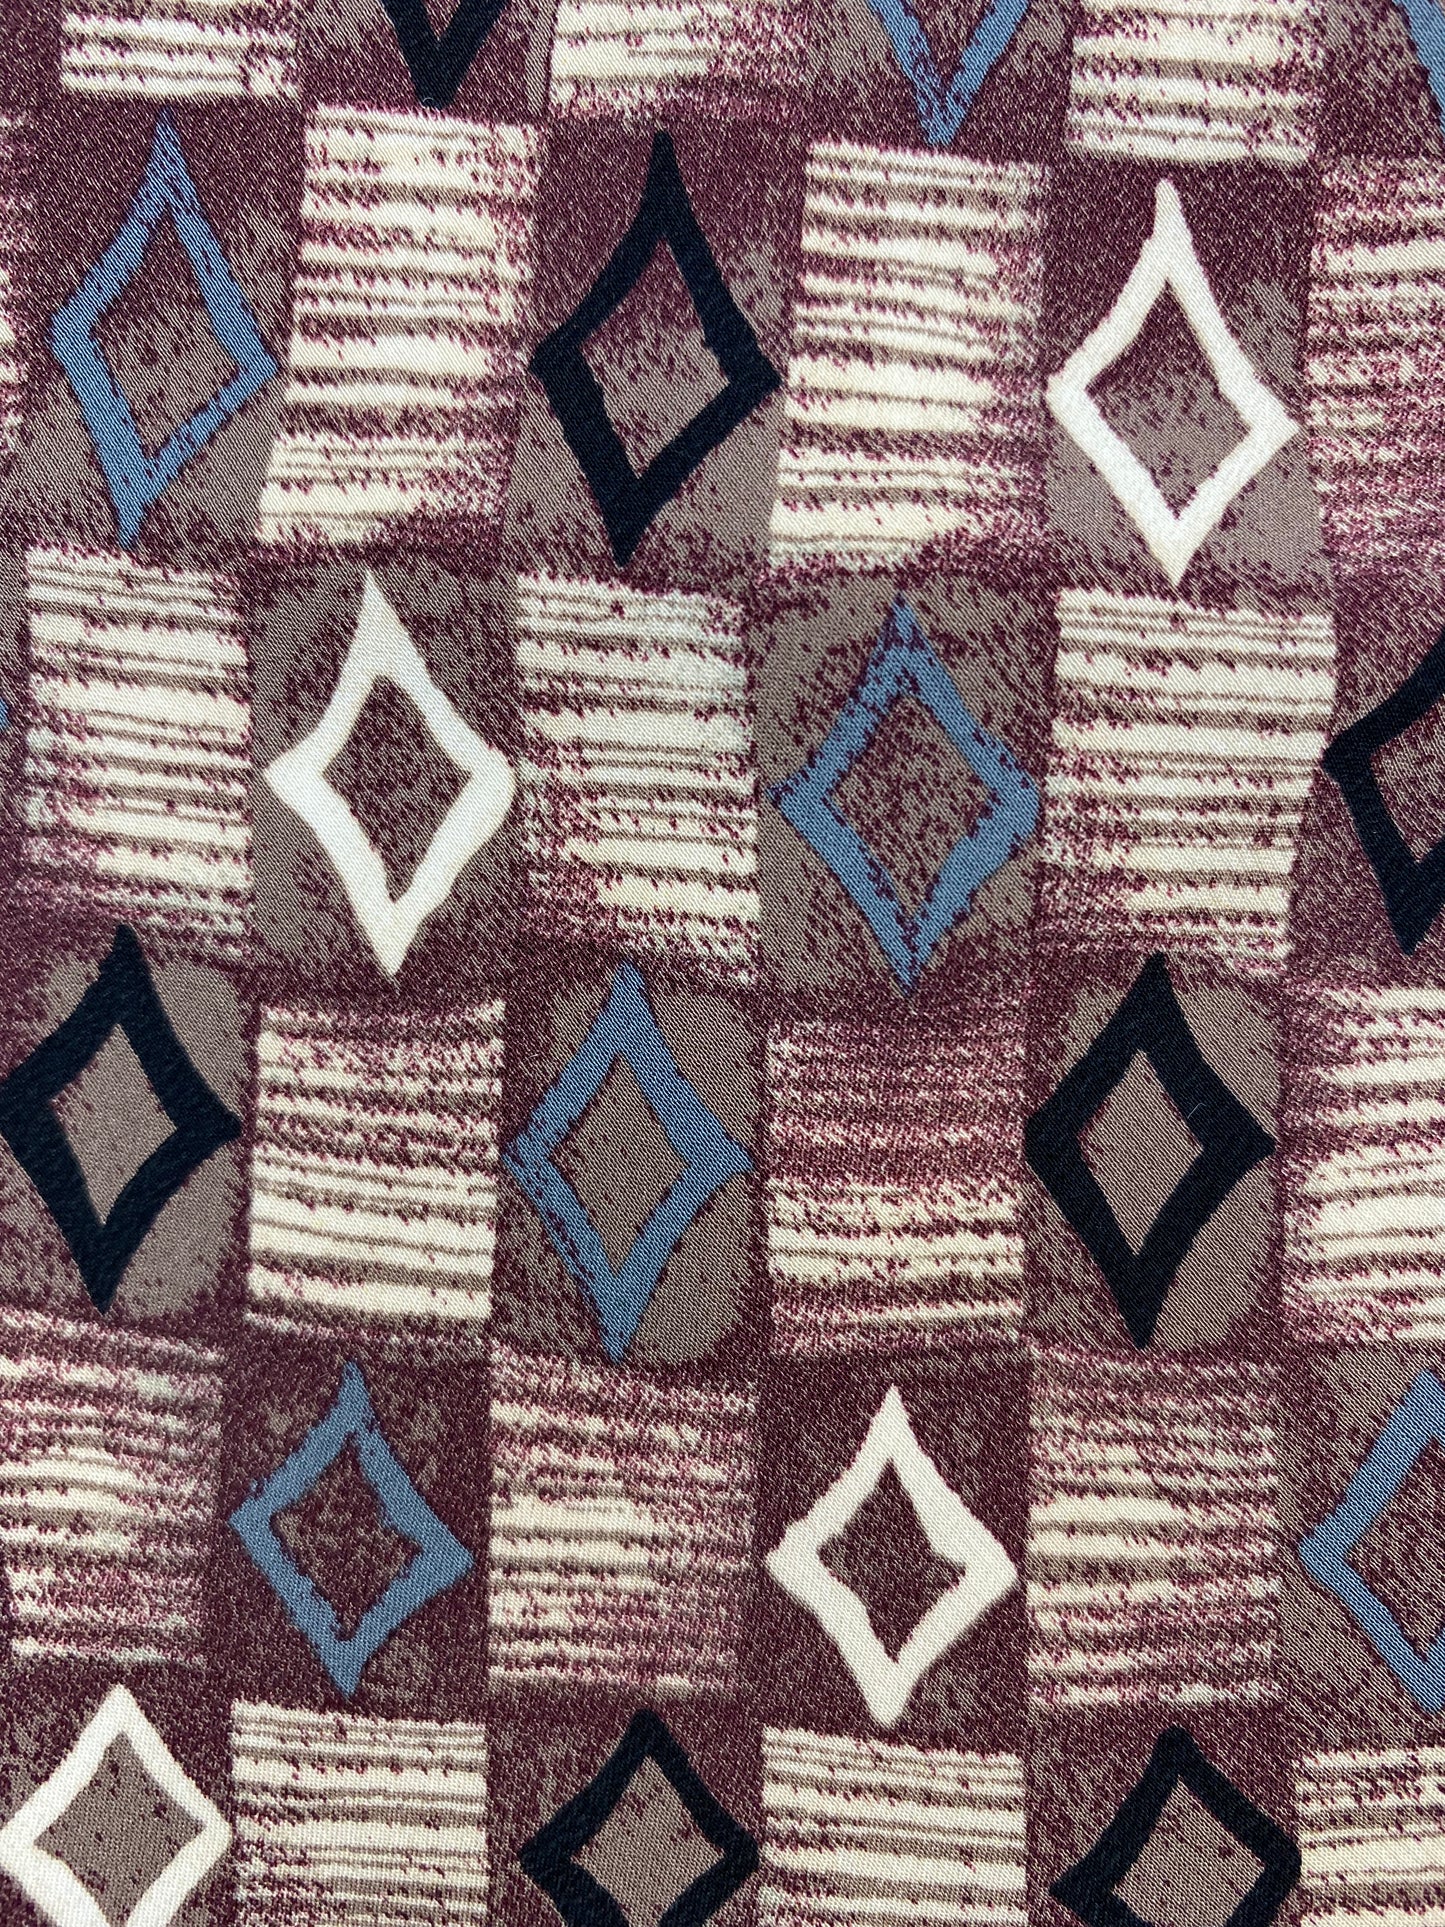 Close-up of: 90s Deadstock Silk Necktie, Men's Vintage Wine/ Black/ White Geometric Pattern Tie, NOS